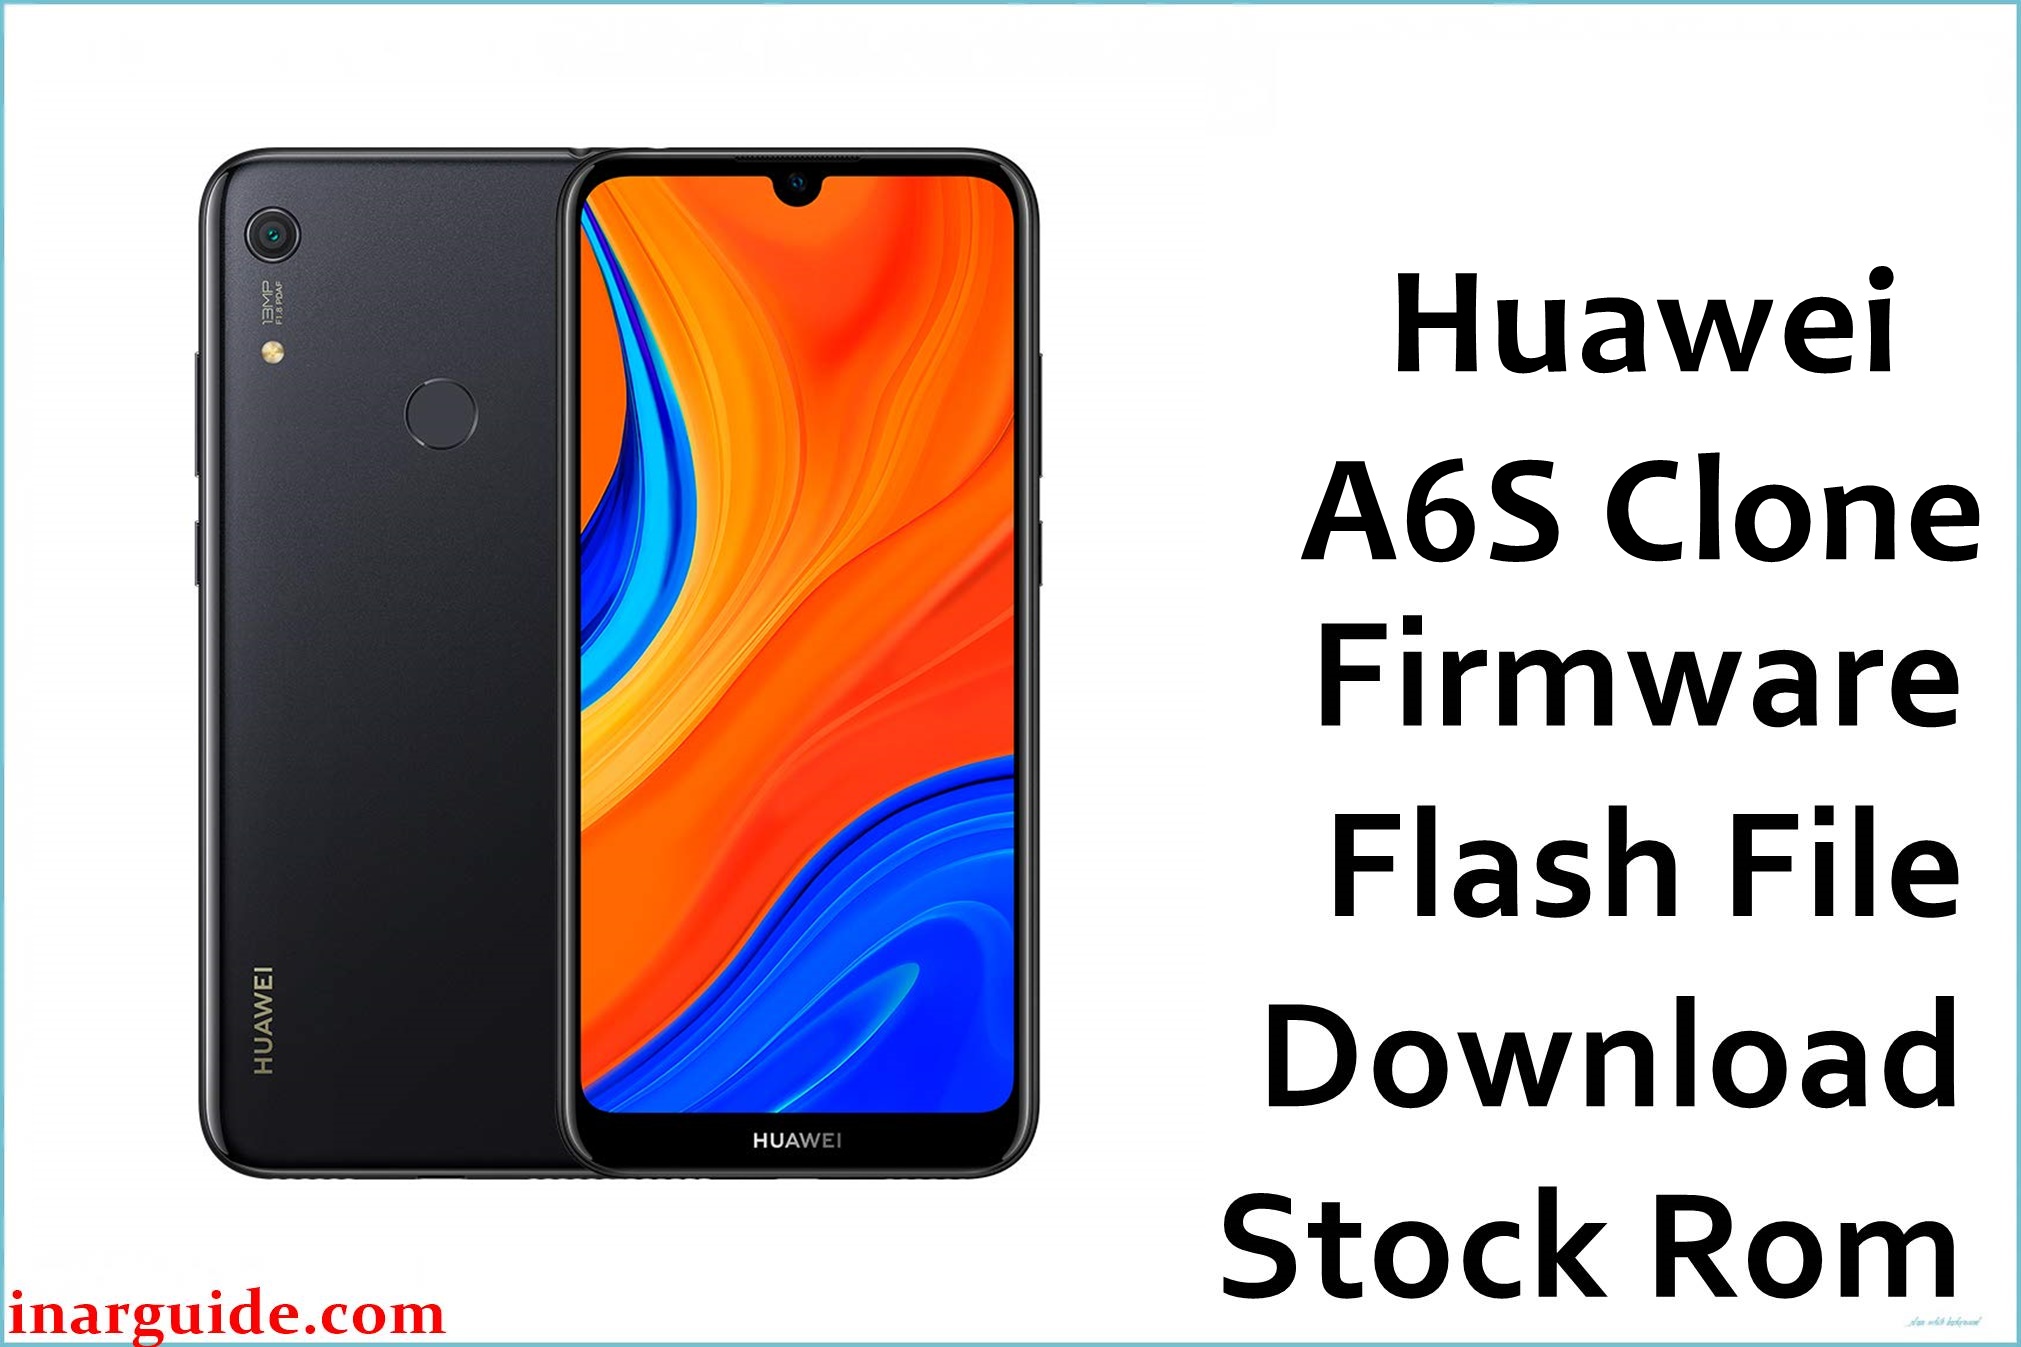 Huawei A6S Clone